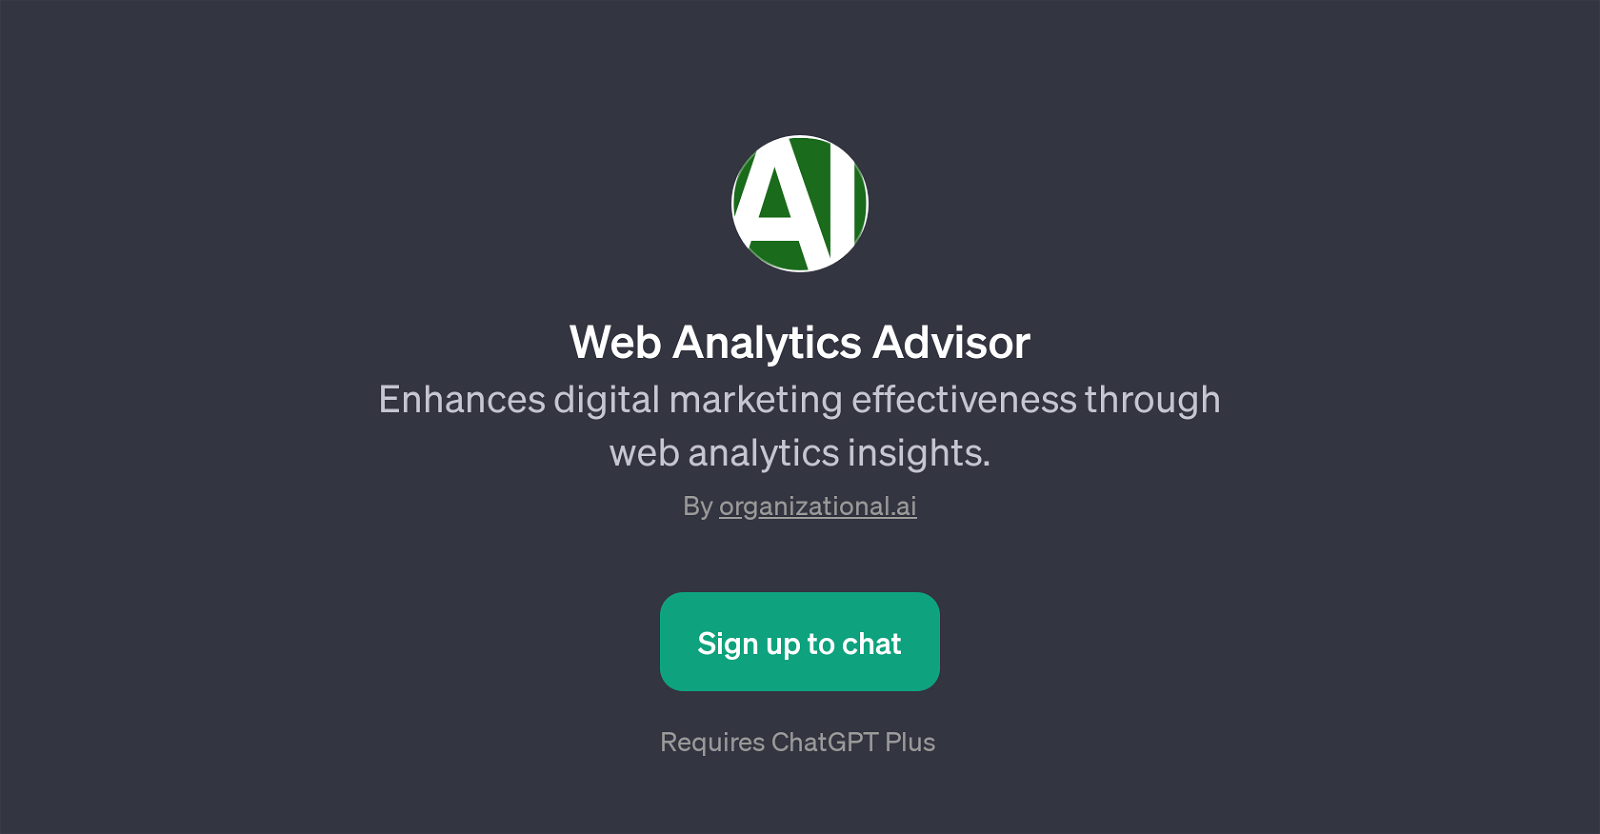 Web Analytics Advisor website